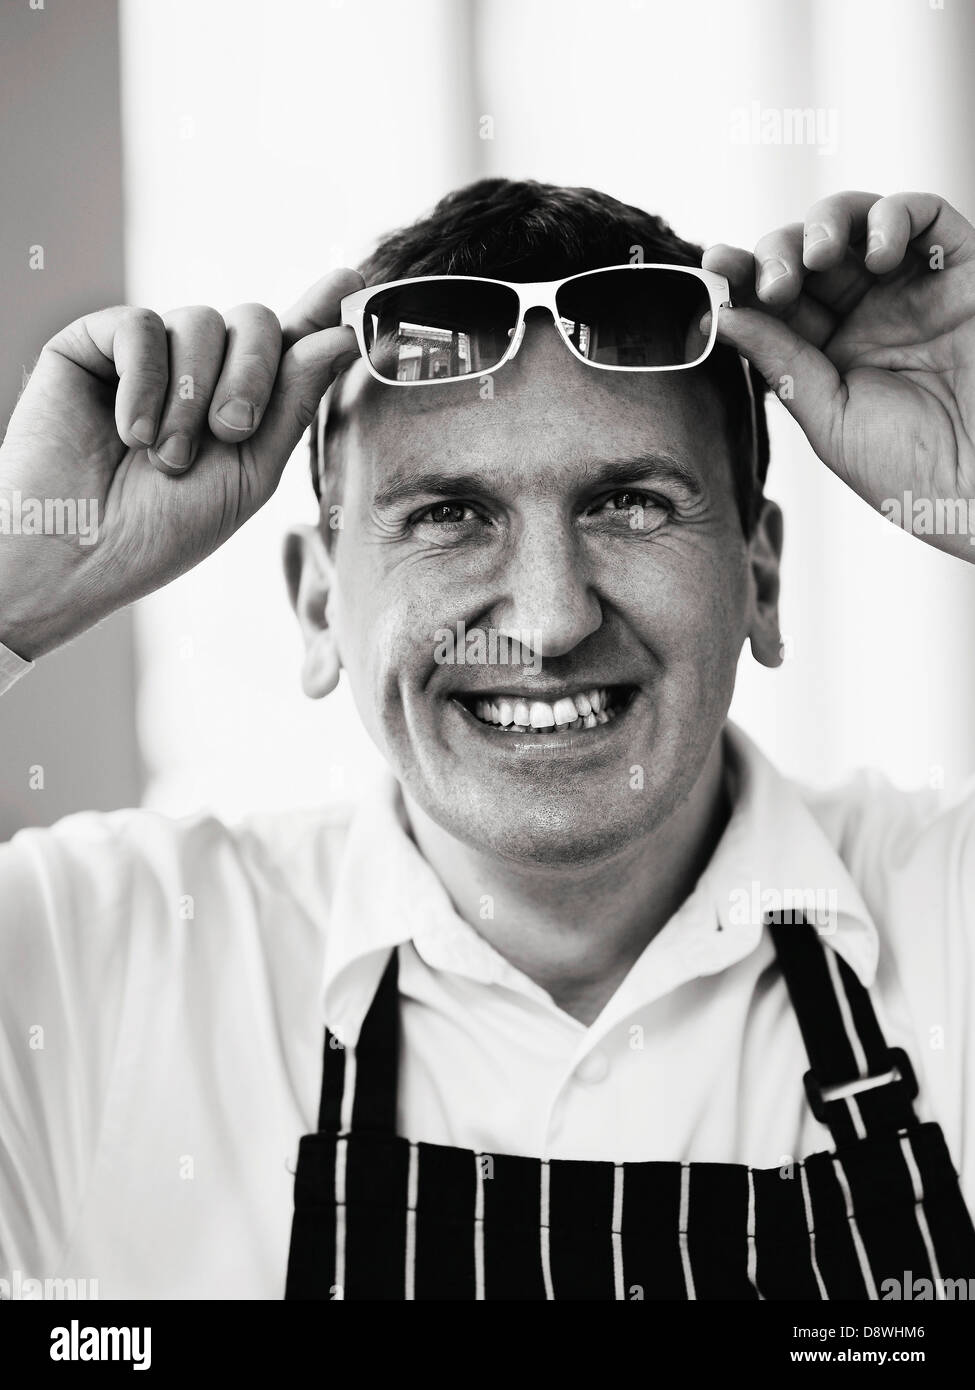 Portrait of the pastry chef Christophe Felder Stock Photo